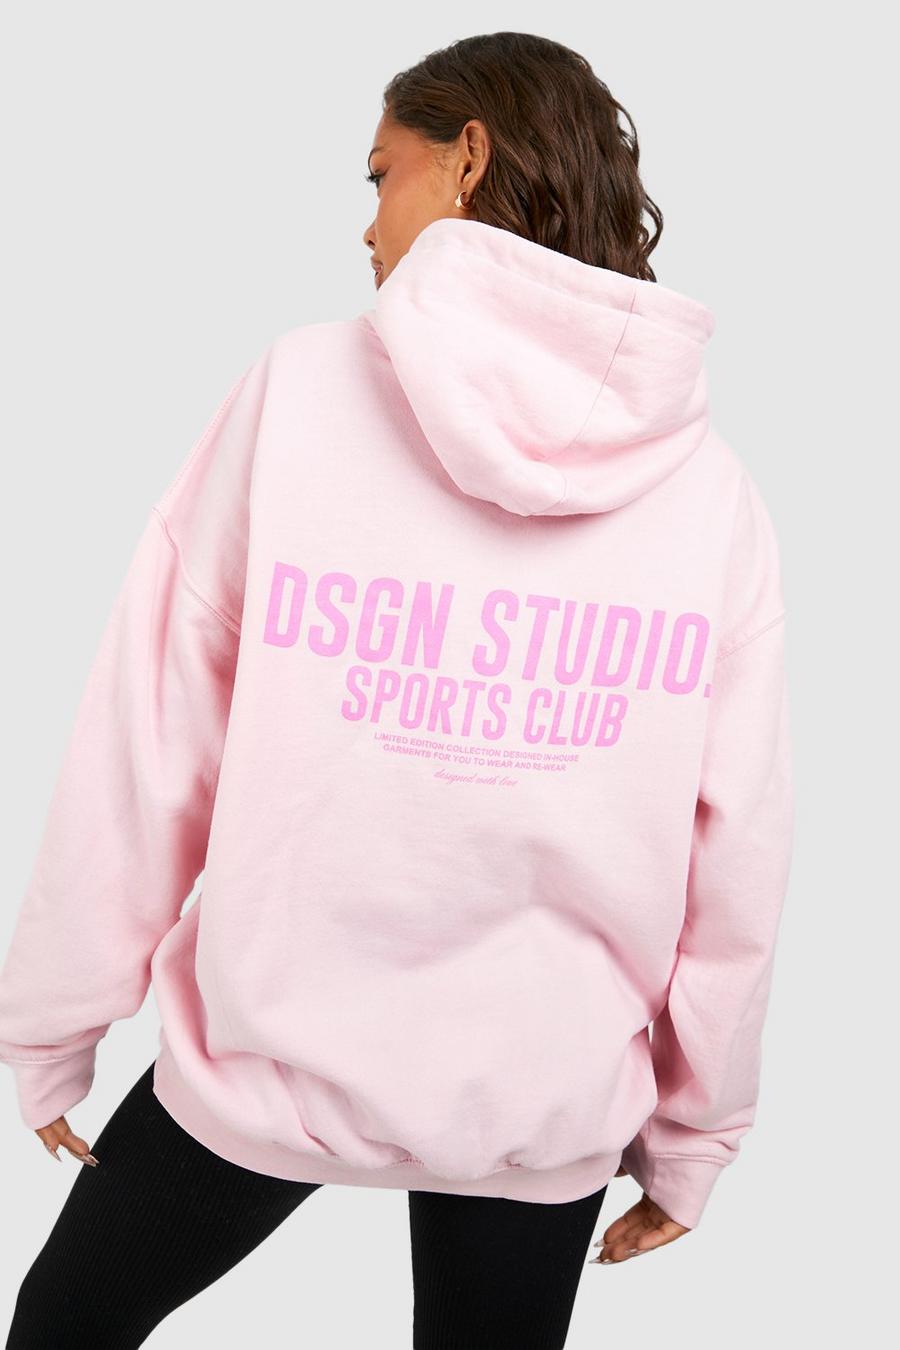 Oversize Hoodie mit Dsgn Studio Sports Club Slogan, Light pink image number 1